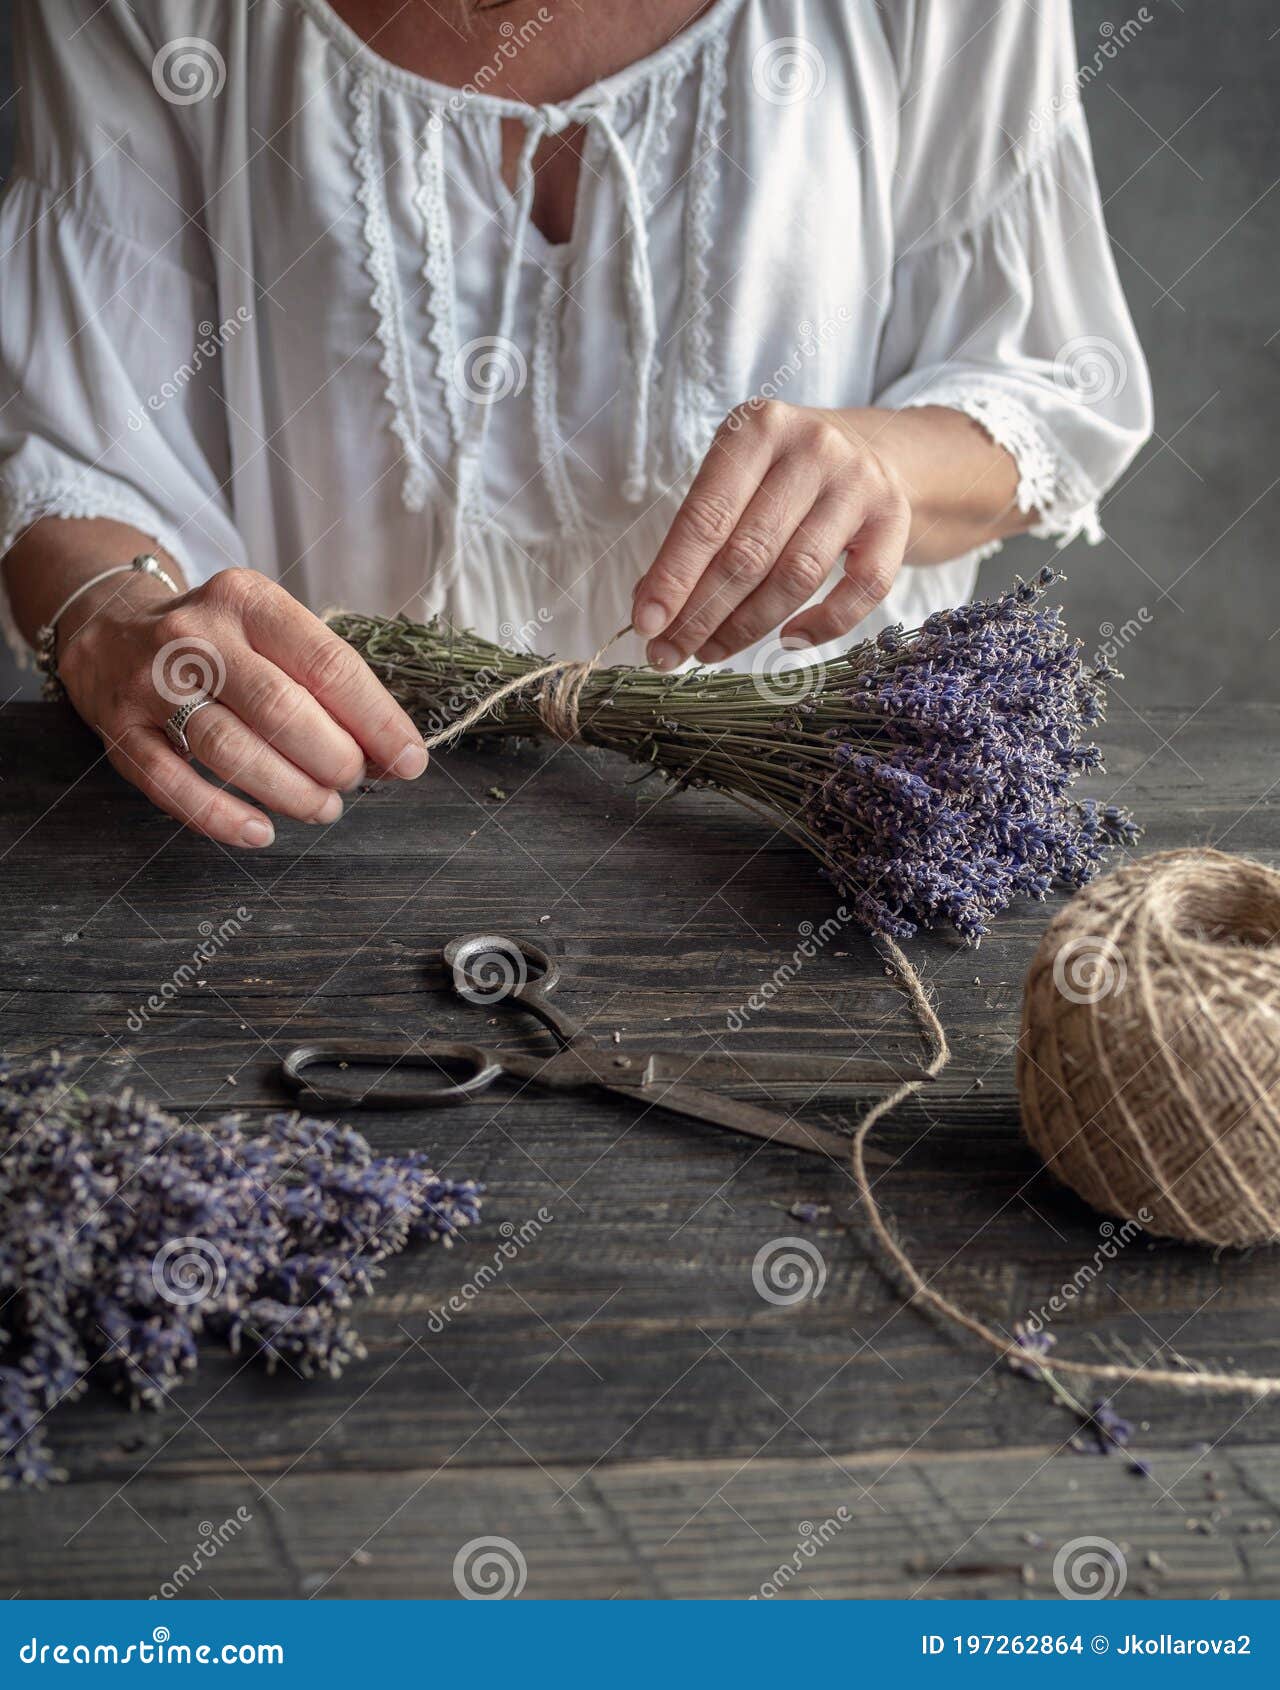 female floristÃ¢â¬â¢s hands tied up bunch of lavender by twine. working table